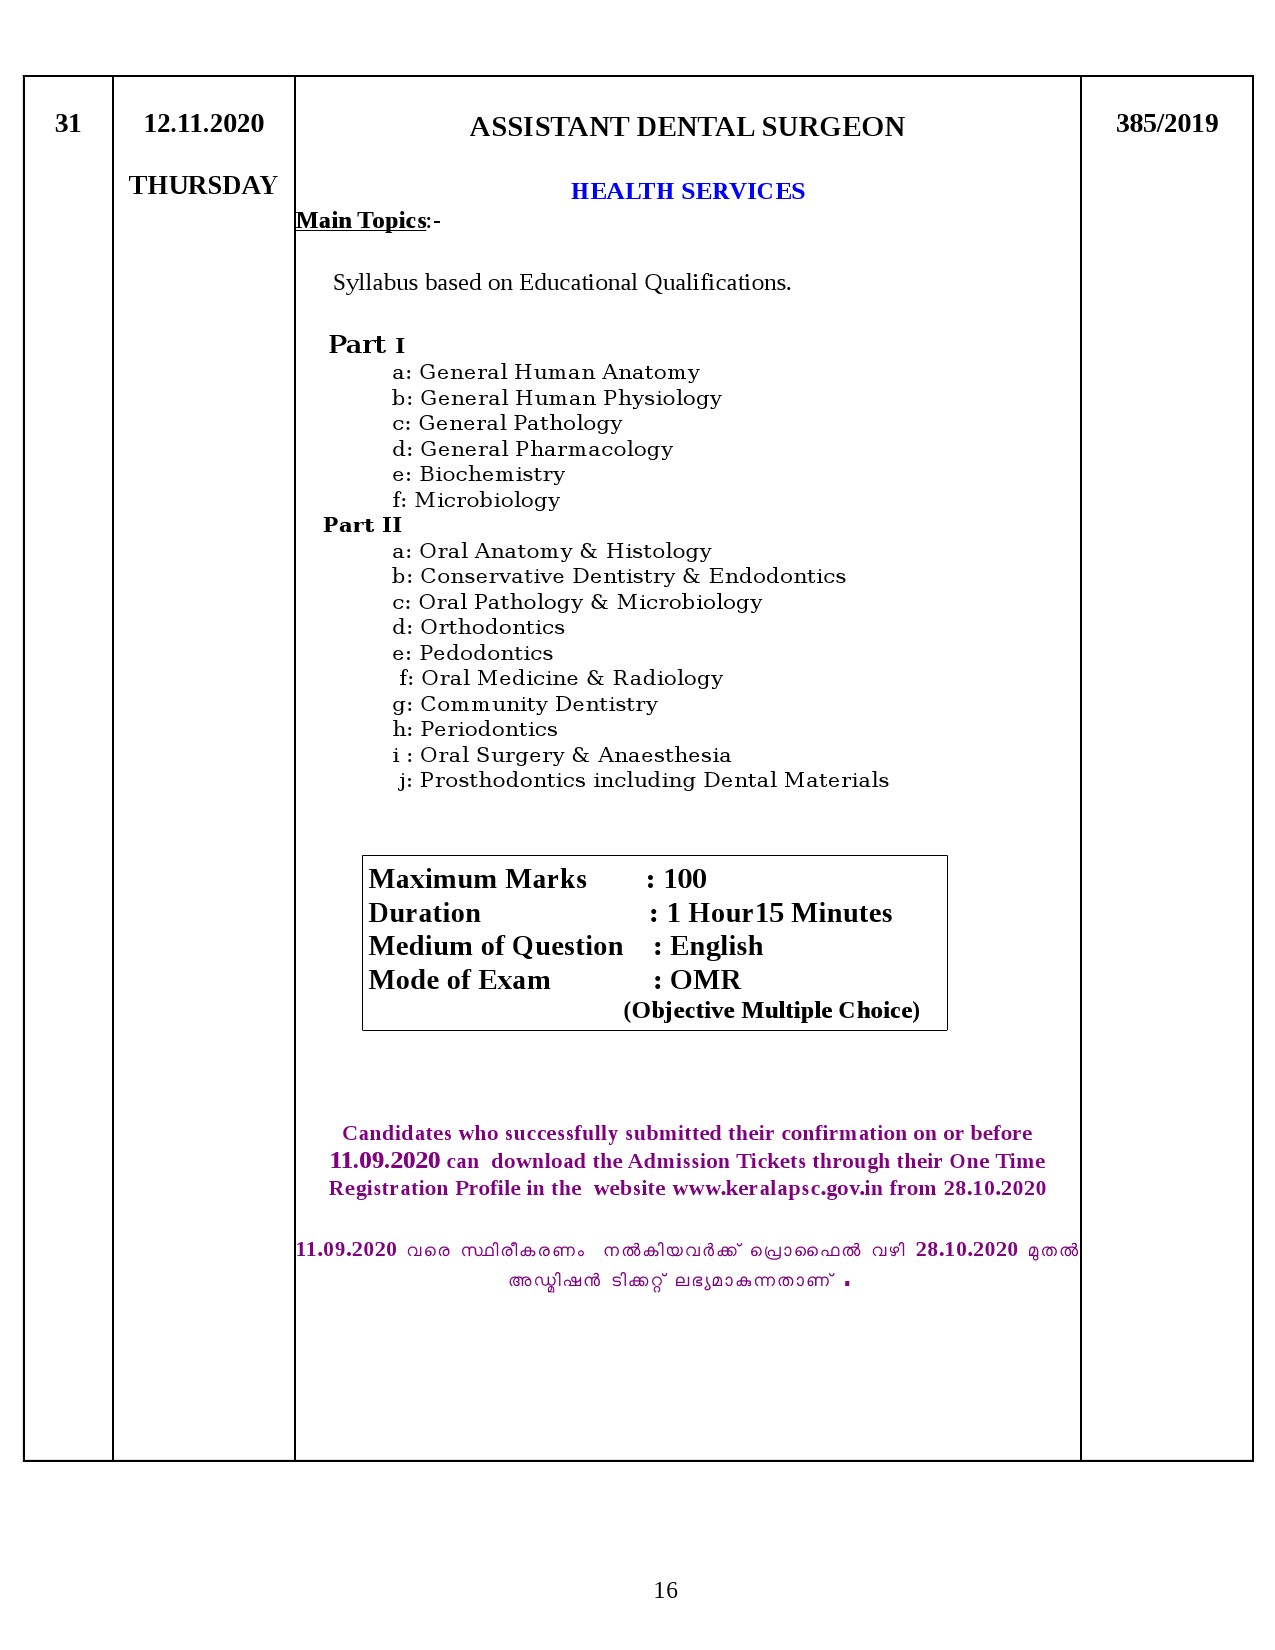 Kerala PSC Final Exam Schedule for November 2020 - Notification Image 16